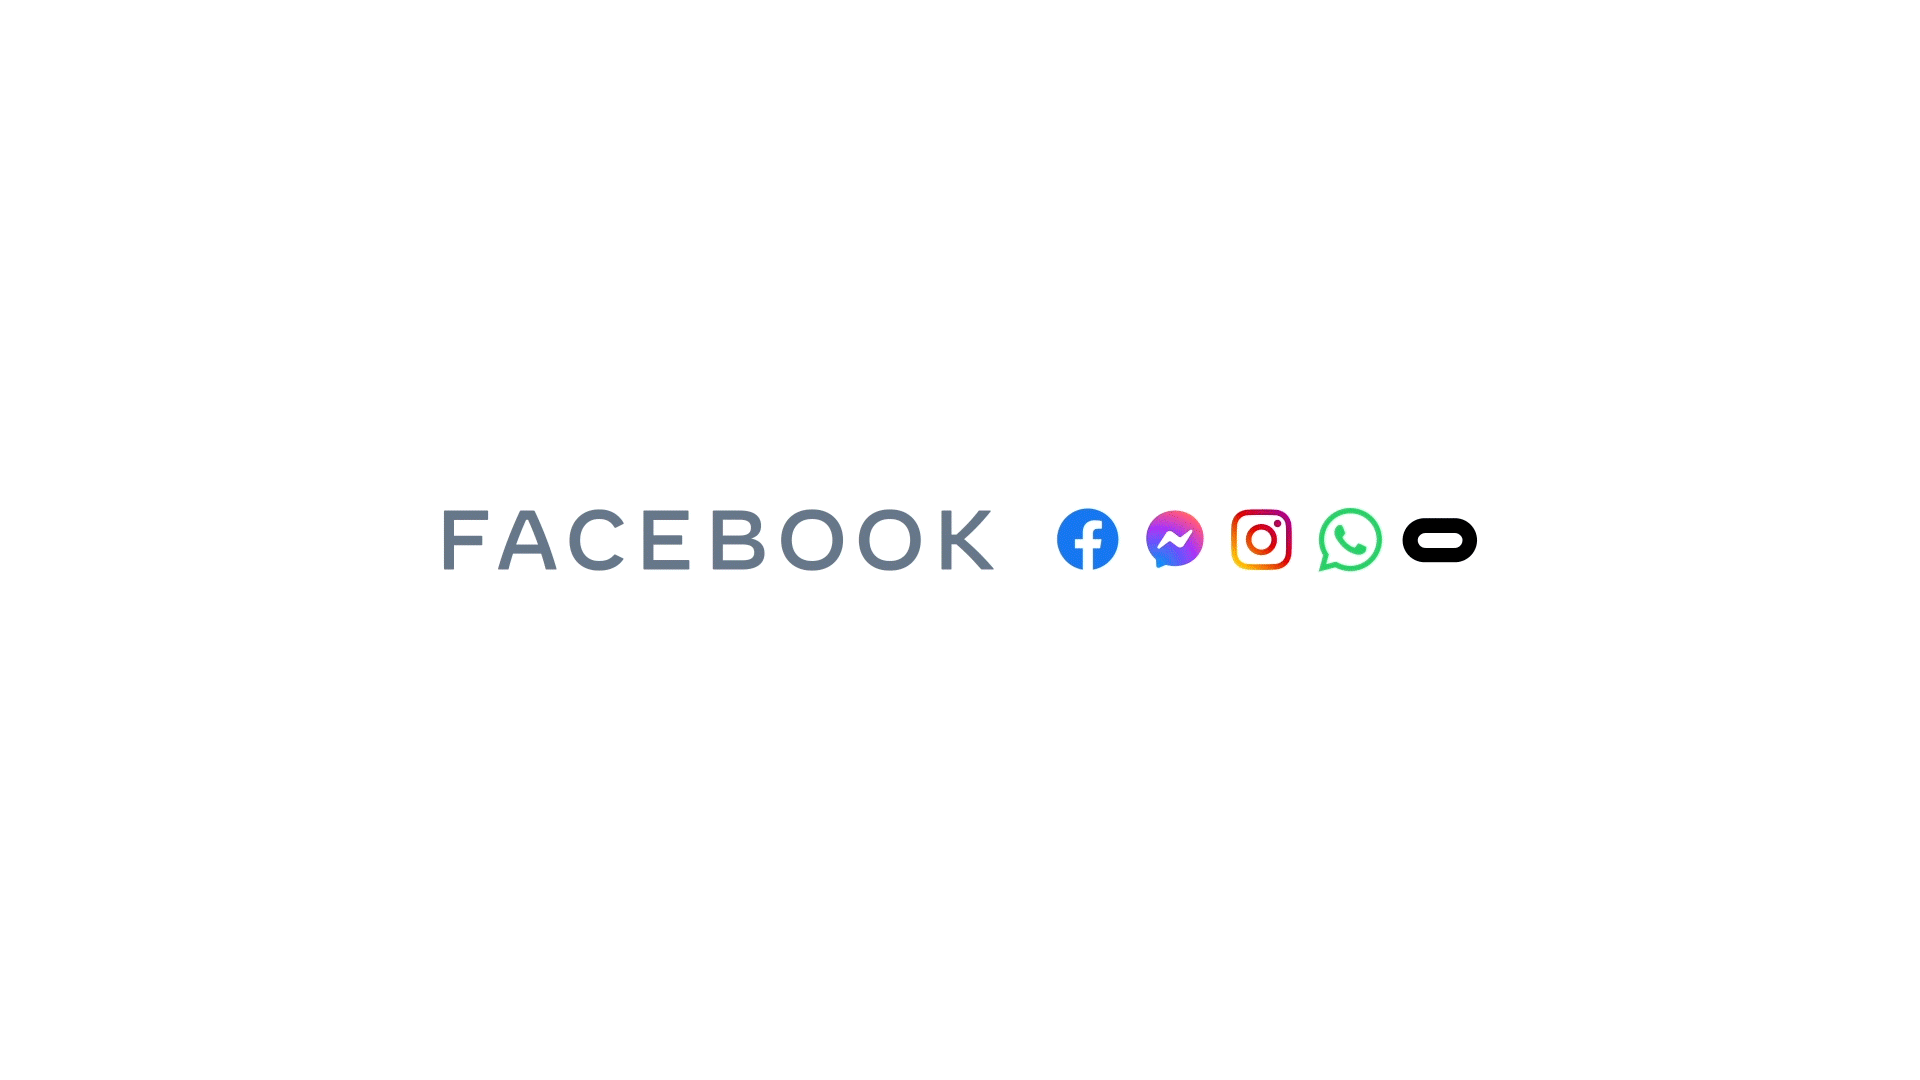 le nouveau logo Meta du groupe Facebook